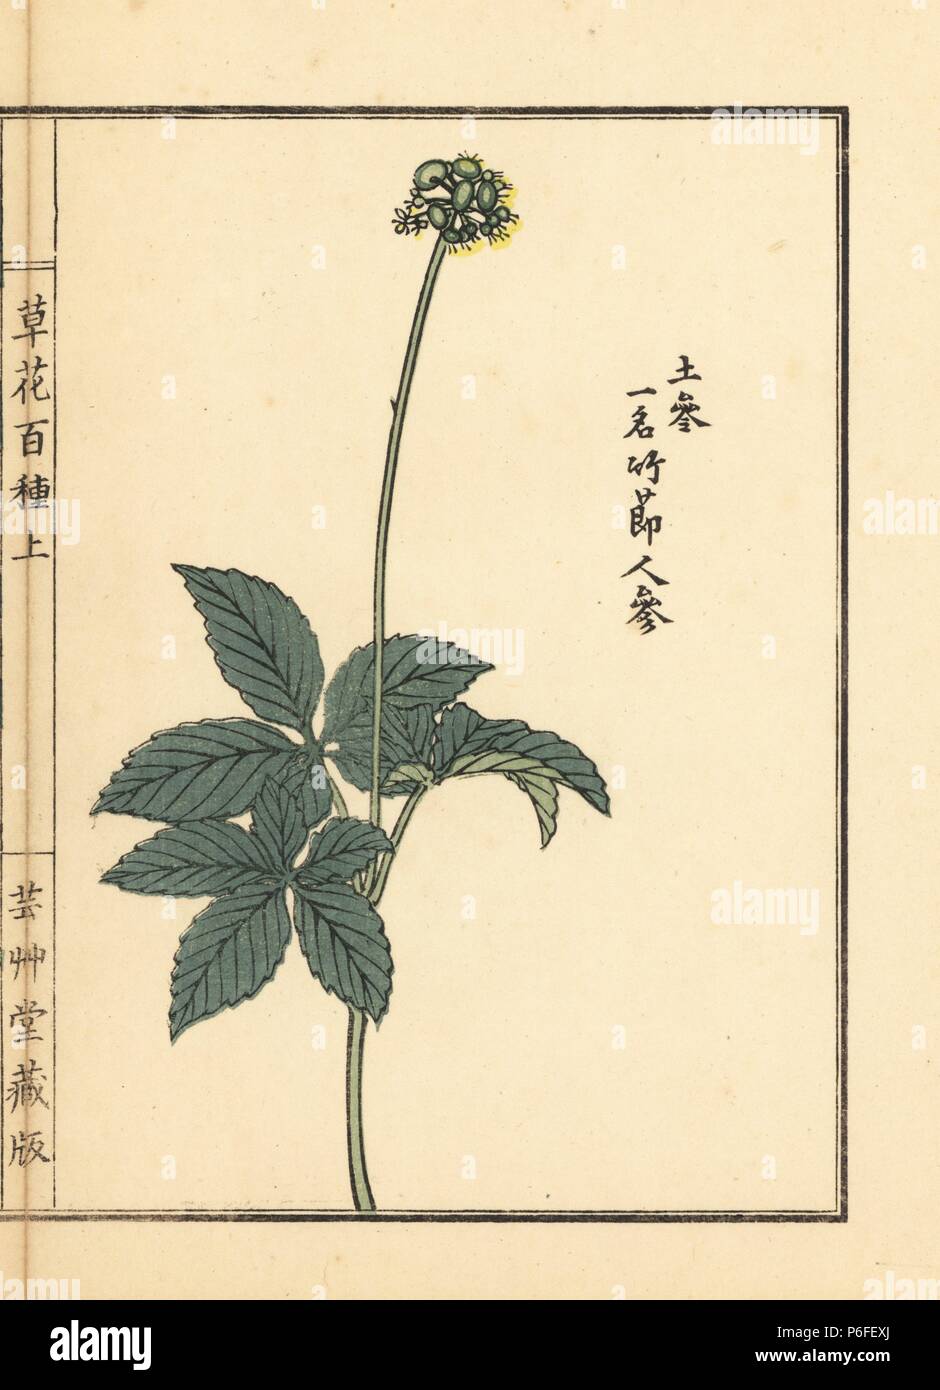 Tochiba ninjin or Japanese ginseng, Panax japonicus. Handcoloured woodblock print by Kono Bairei from Kusa Bana Hyakushu (One Hundred Varieties of Flowers), Tokyo, Yamada, 1901. Stock Photo